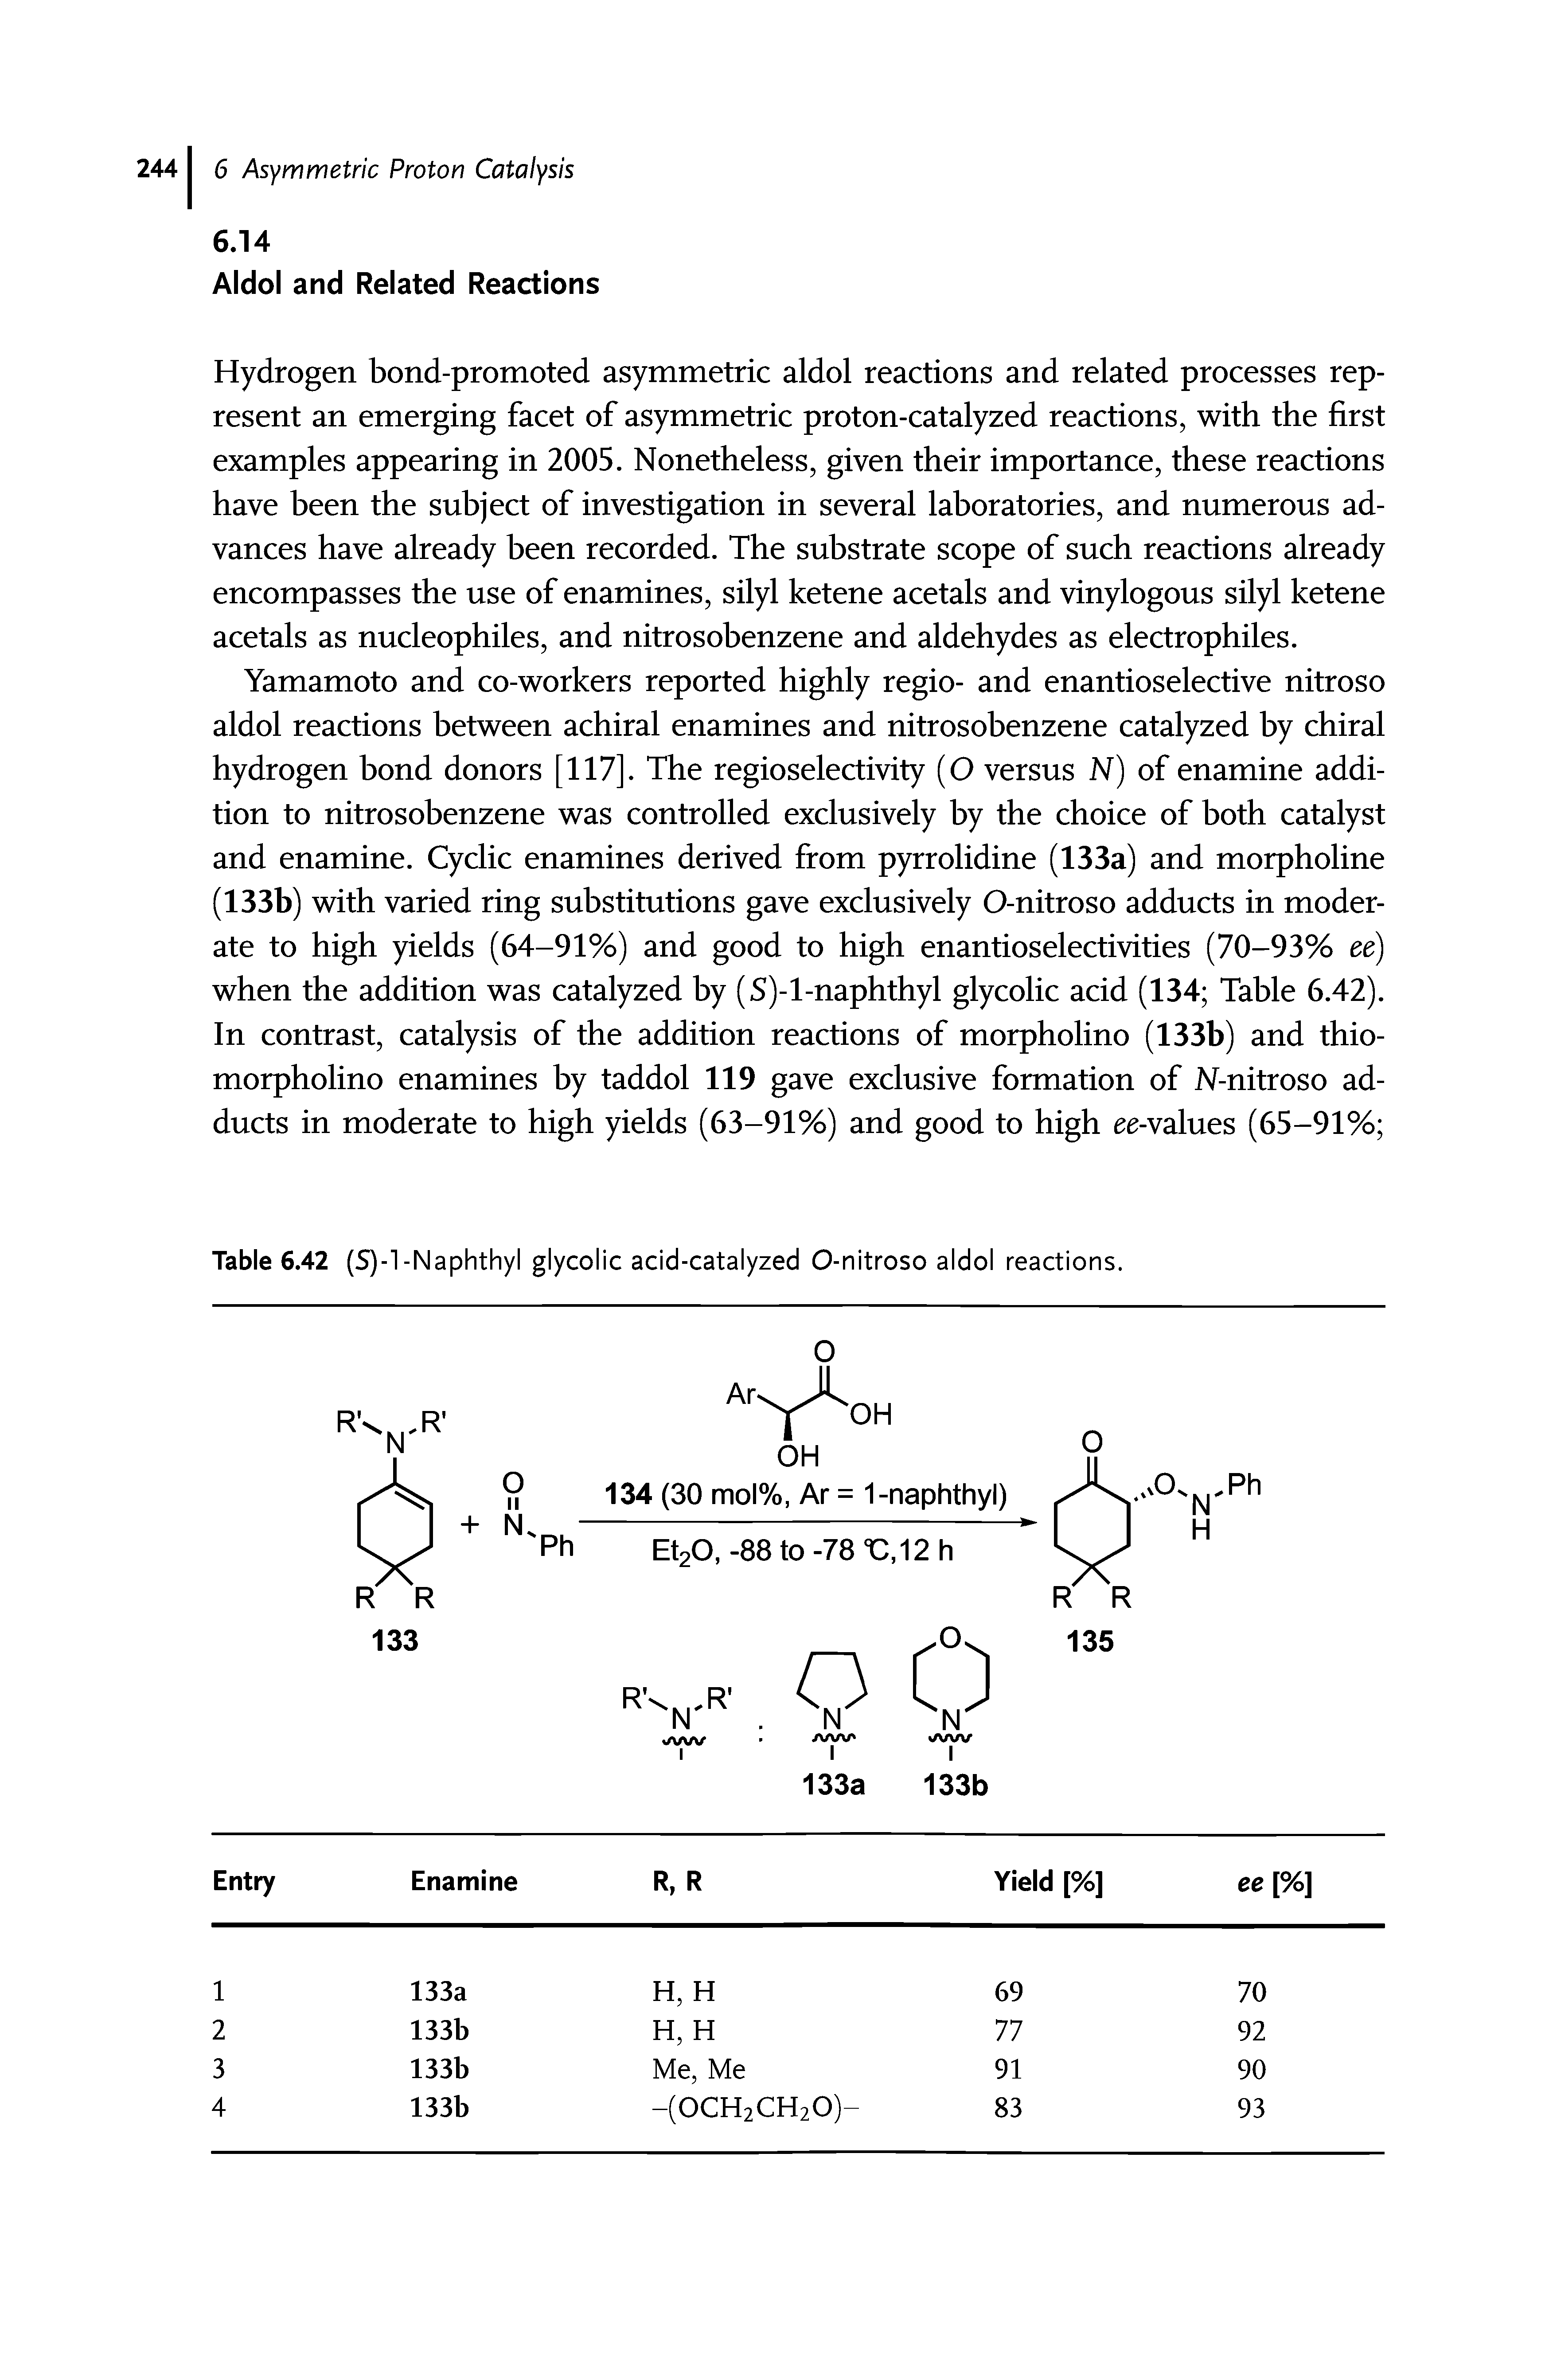 Table 6.42 (S)-l-Naphthyl glycolic acid-catalyzed O-nitroso aldol reactions.